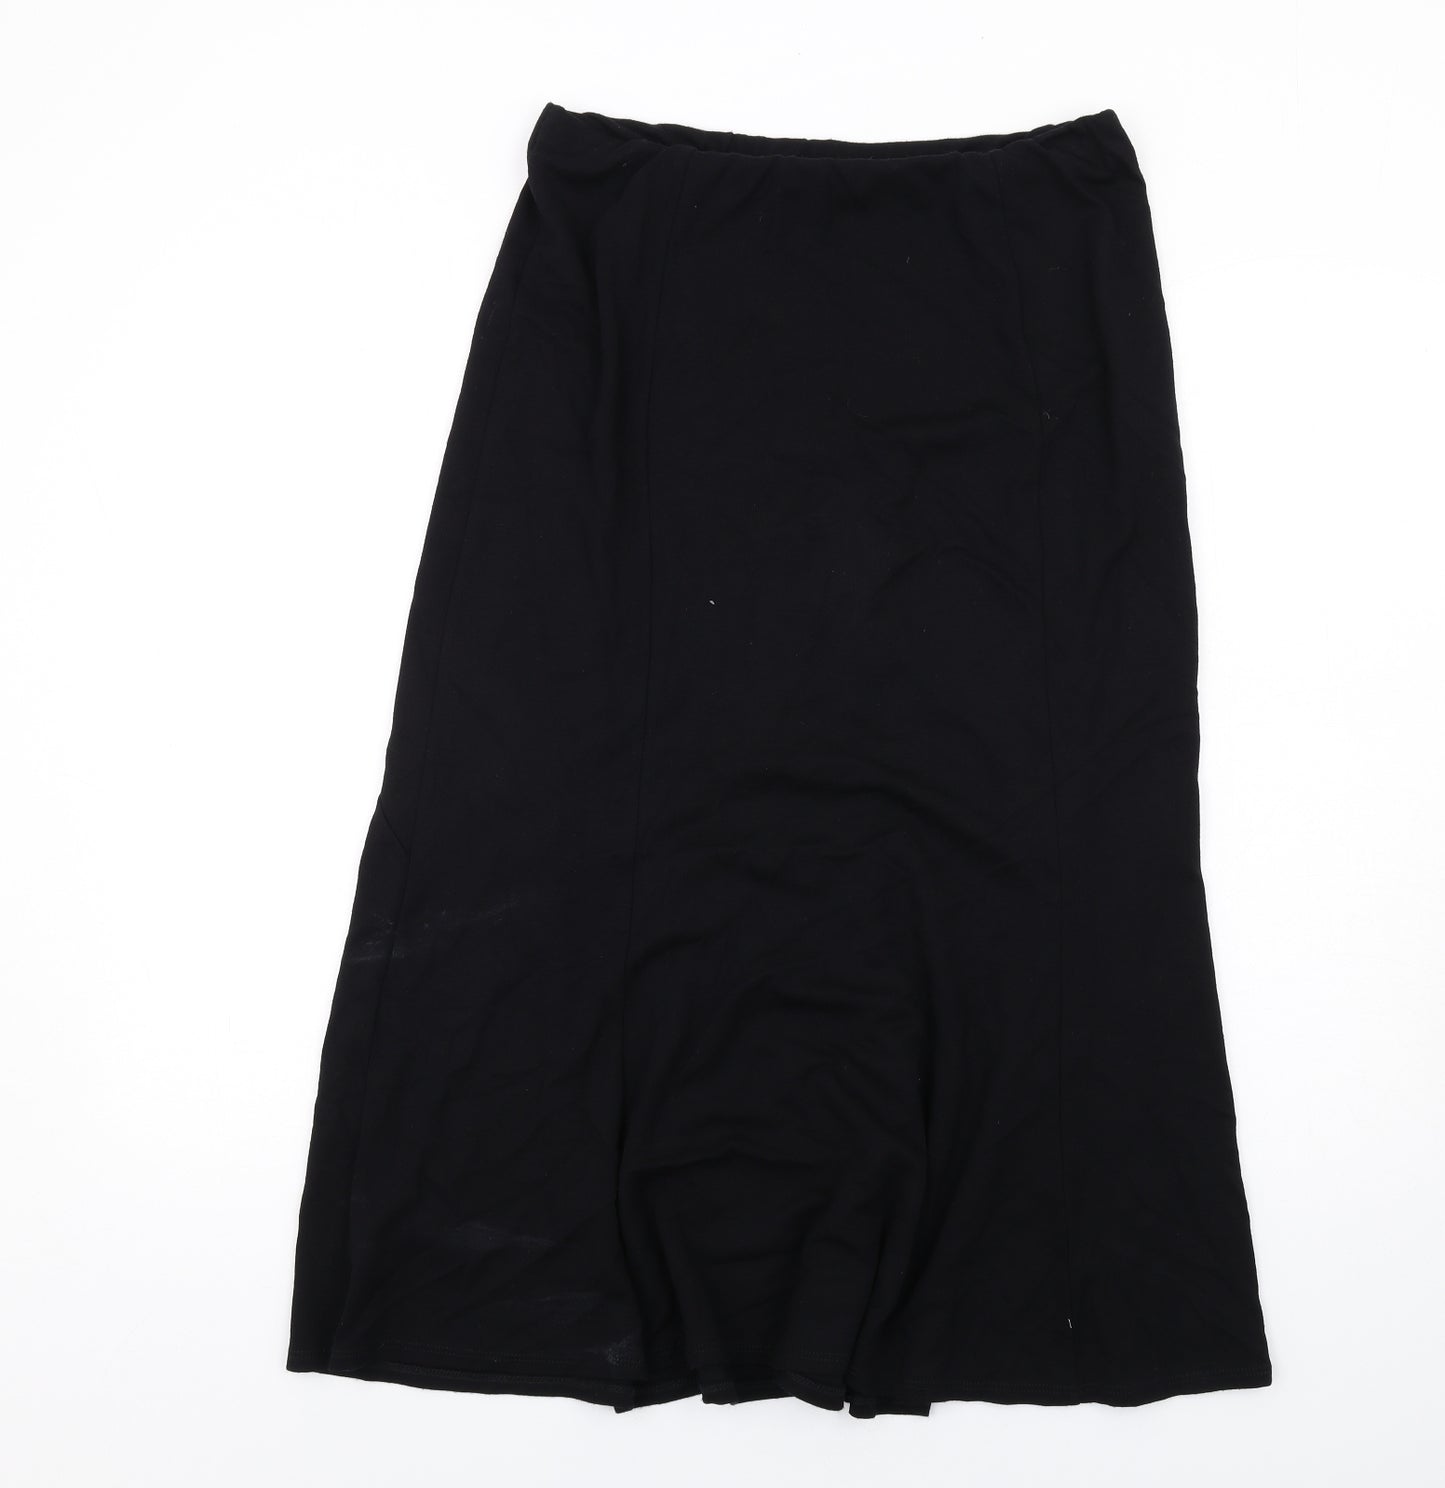 Bonmarché Womens Black Viscose Swing Skirt Size 12